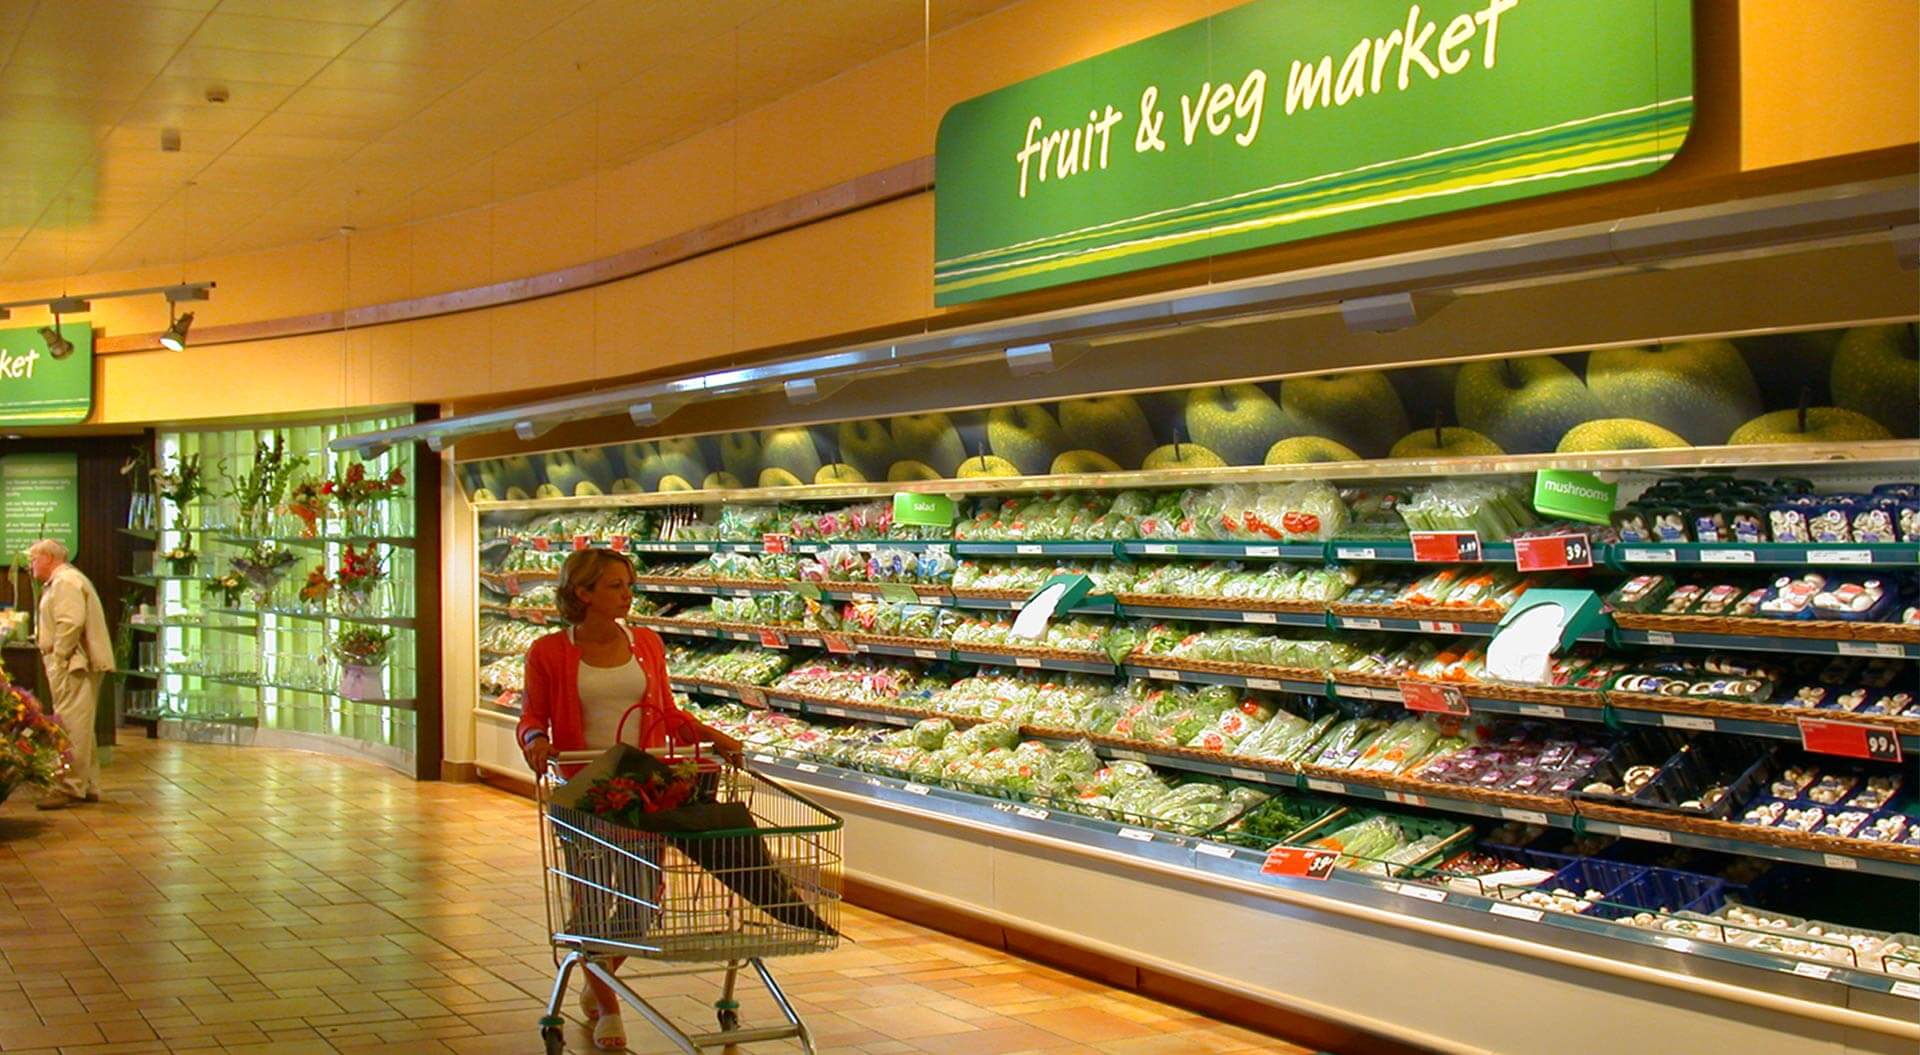 Safeway supermarket interior store design and branding for fruit and vegatables market